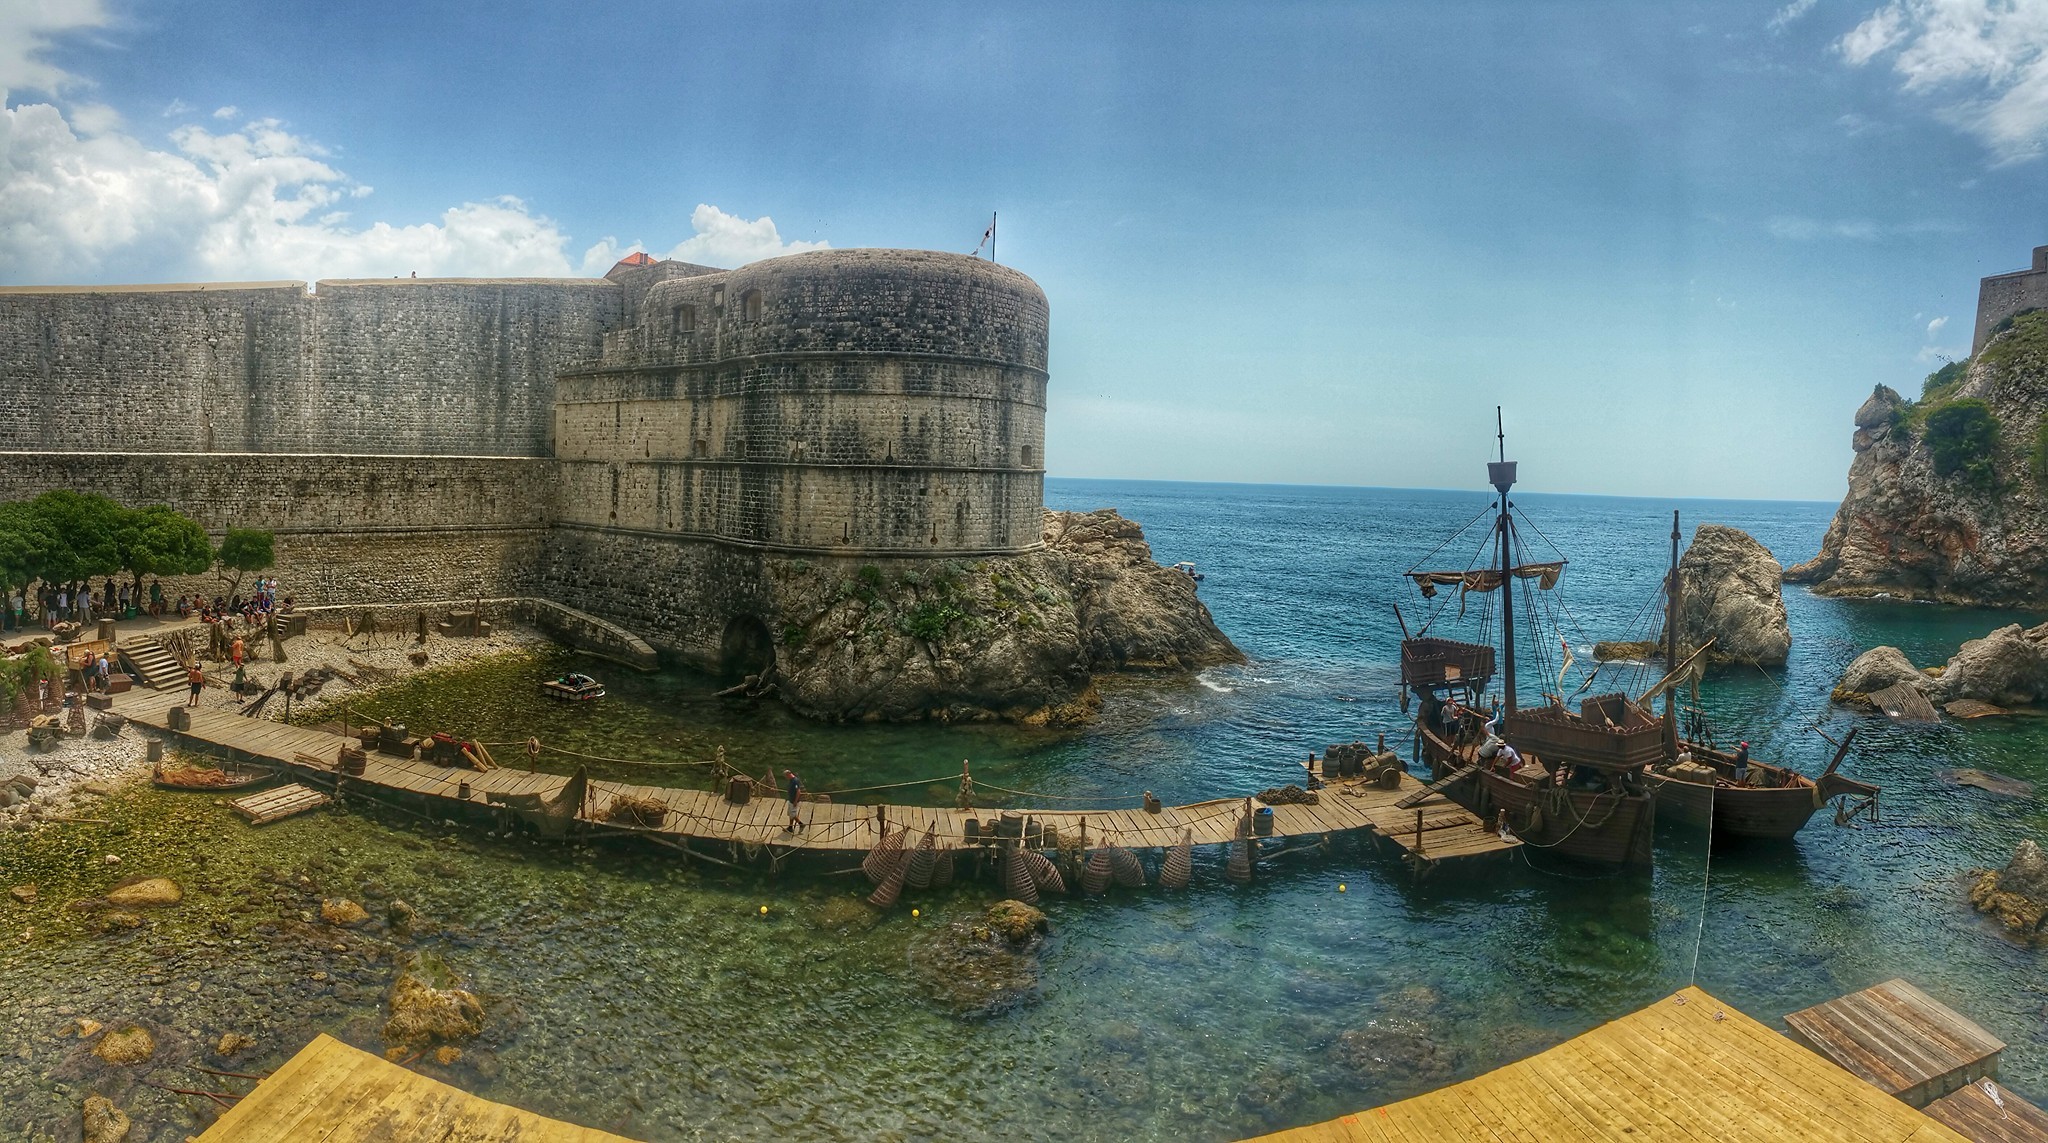 Dubrovnik Croatia Game Of Thrones Set Movie Sets Film Set Television Sets Sea Coast Ship Pirates 2048x1143